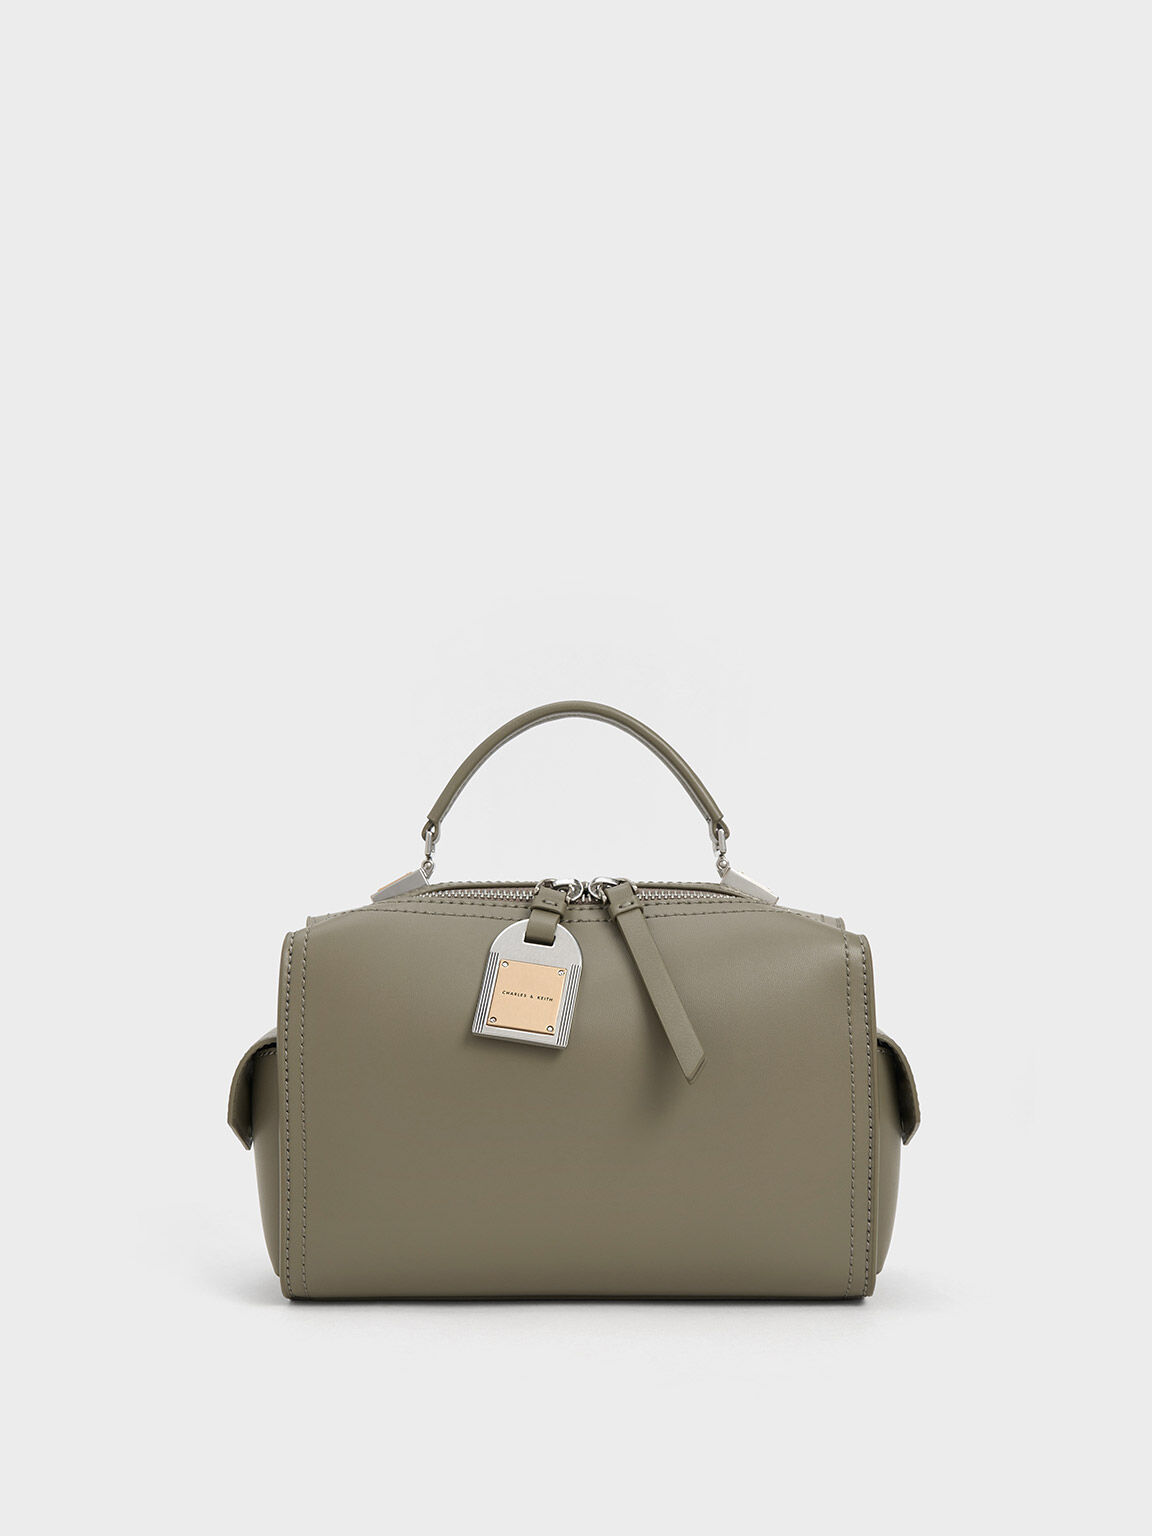 Vintage Bally Bag, Shoulder Crossbody Top Handle Bag, Green Color